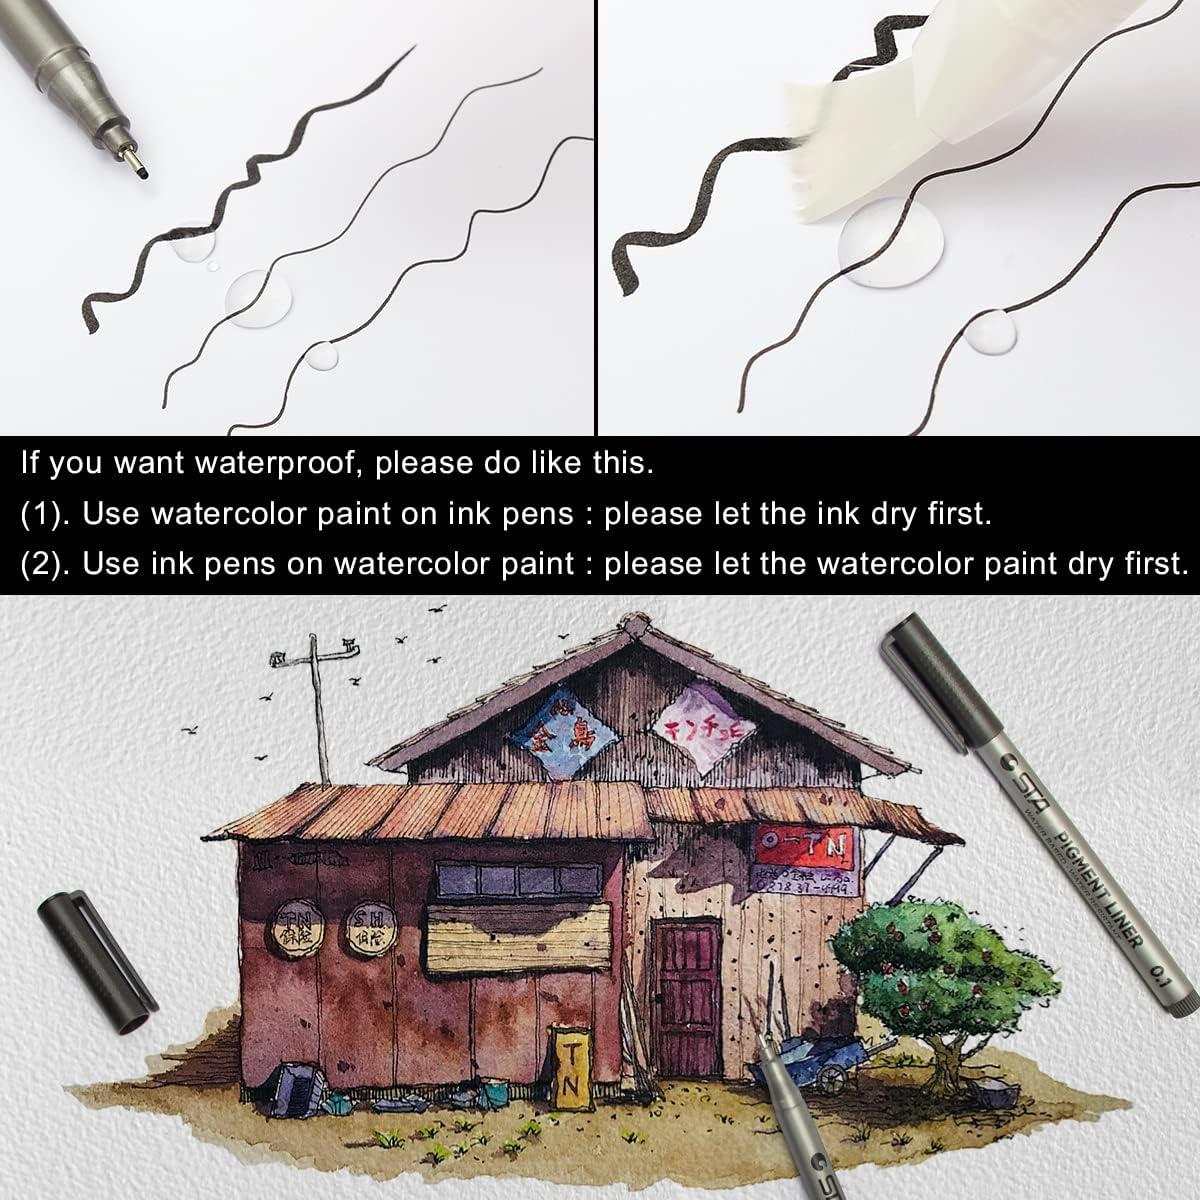 Precision Black Micro-Pen Fineliner Ink Pens, Waterproof Archival Ink, Drawing  Pens, Artist Illustration Pens, Multiliner, for Art Watercolor, Sketching,  Anime, Manga, Design, 9/Set(Black) 